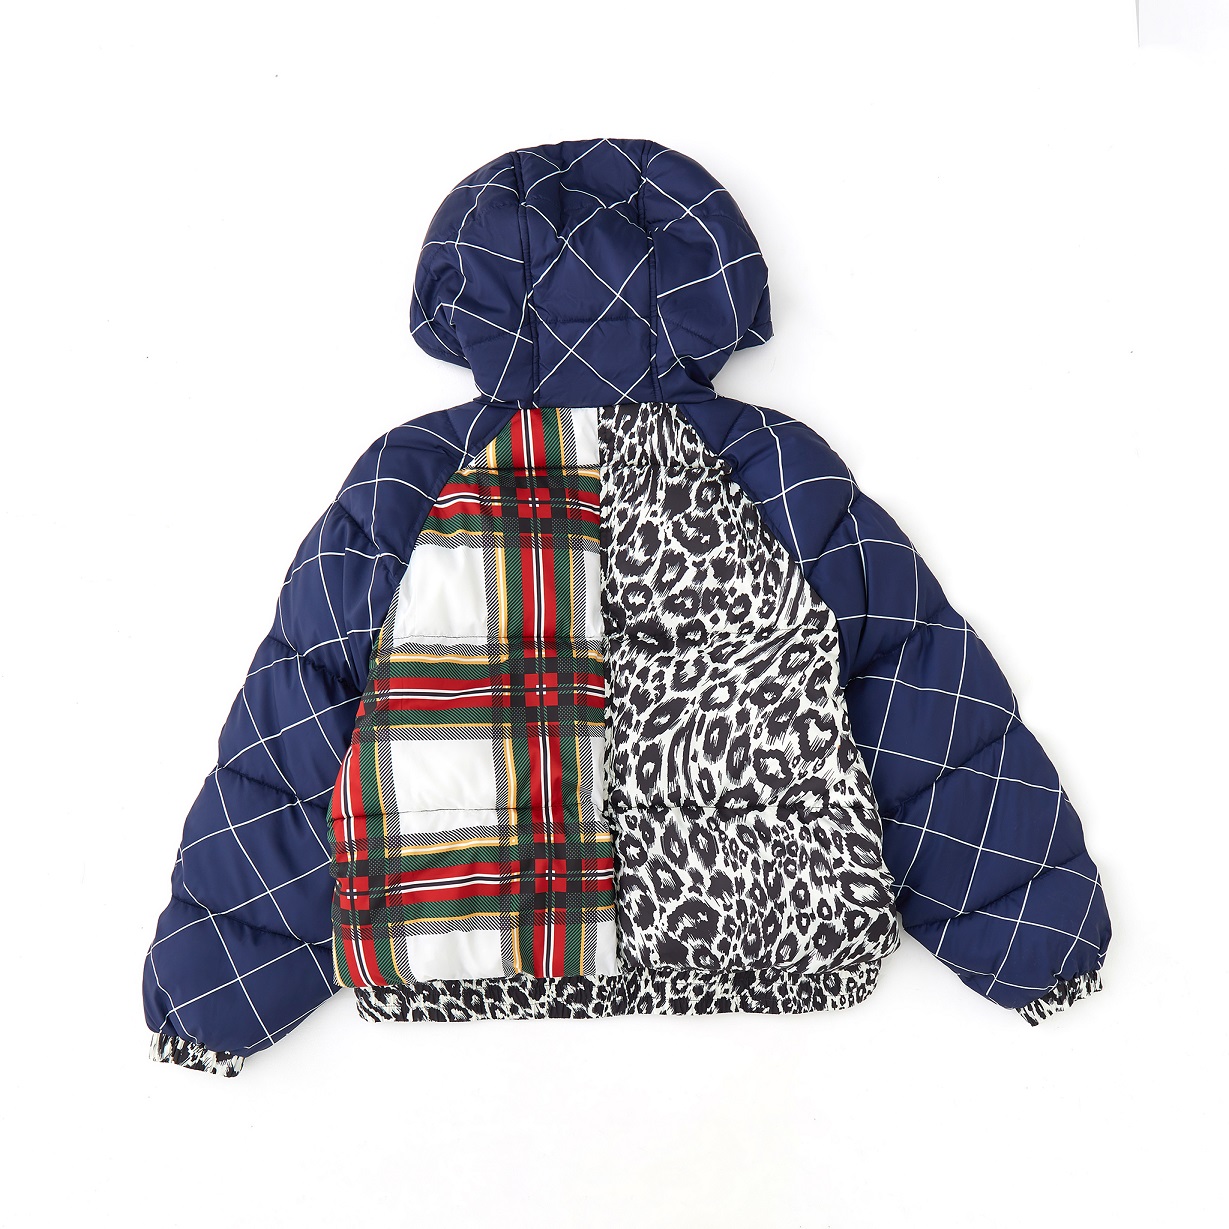 Contrast Printed Women\'s Winter Warm Hooded Puffer Coat